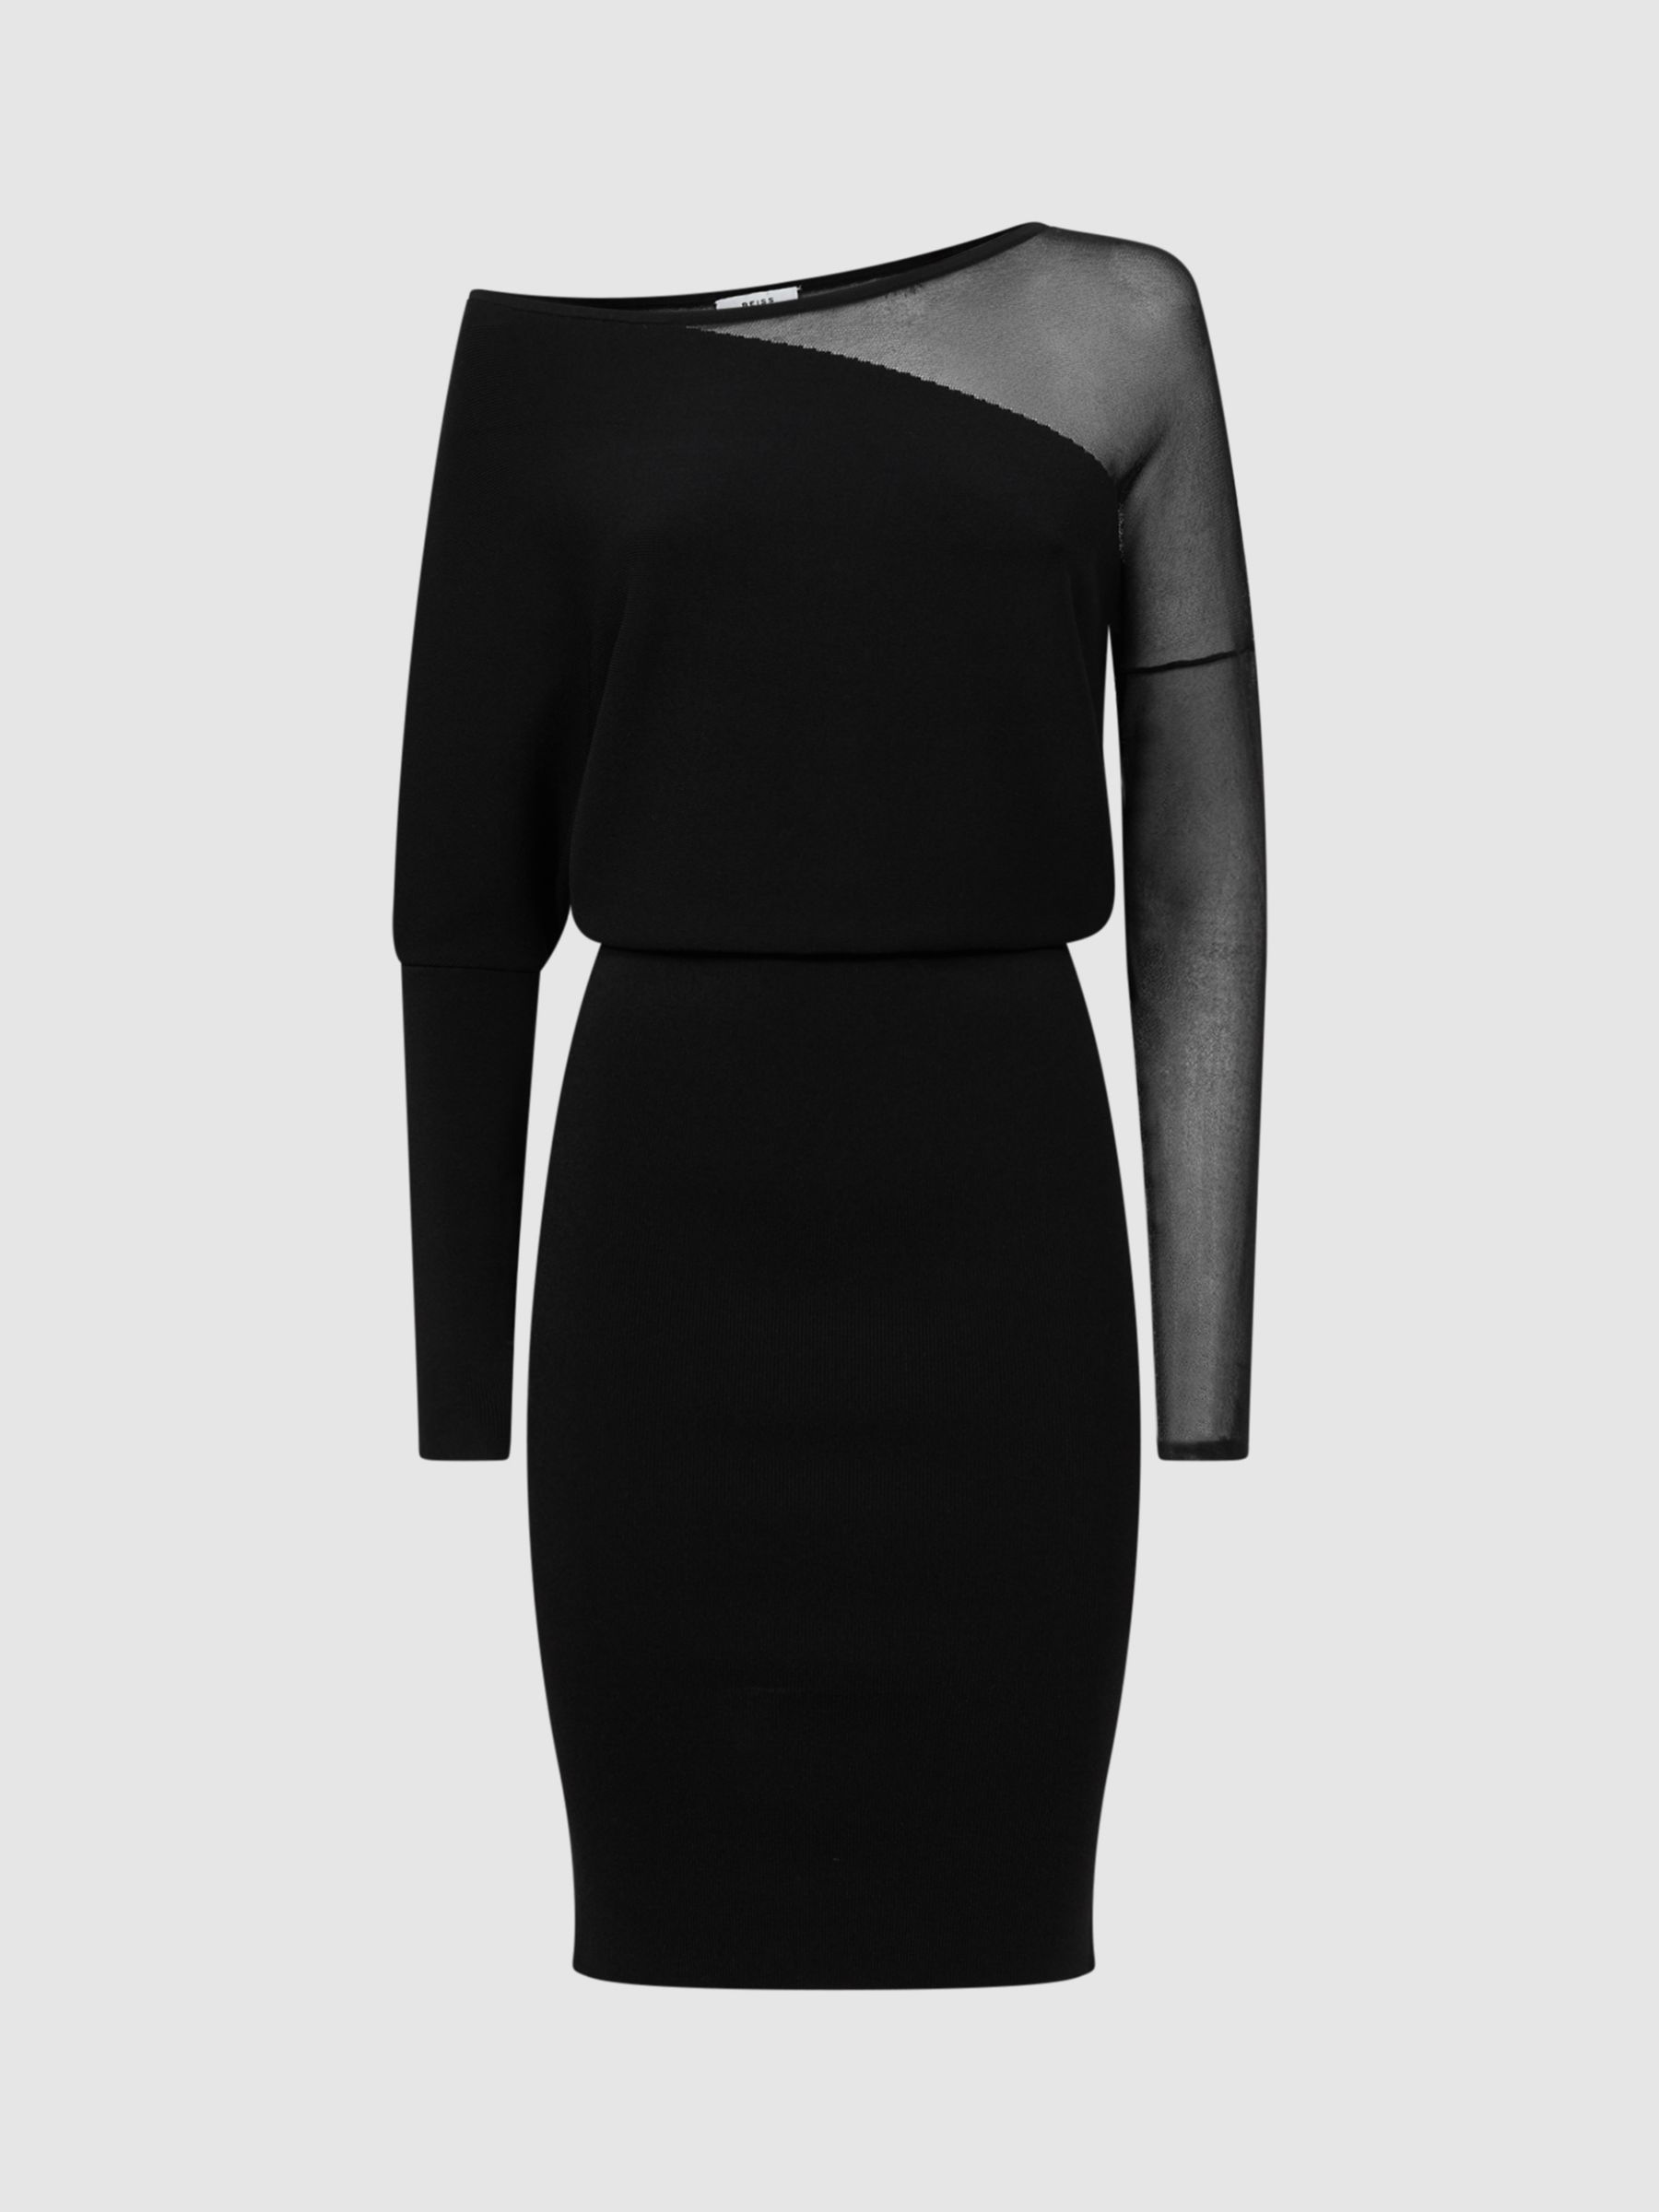 Buy Reiss Deanna Bodycon Knitted Sheer Sleeve Dress, Black Online at johnlewis.com